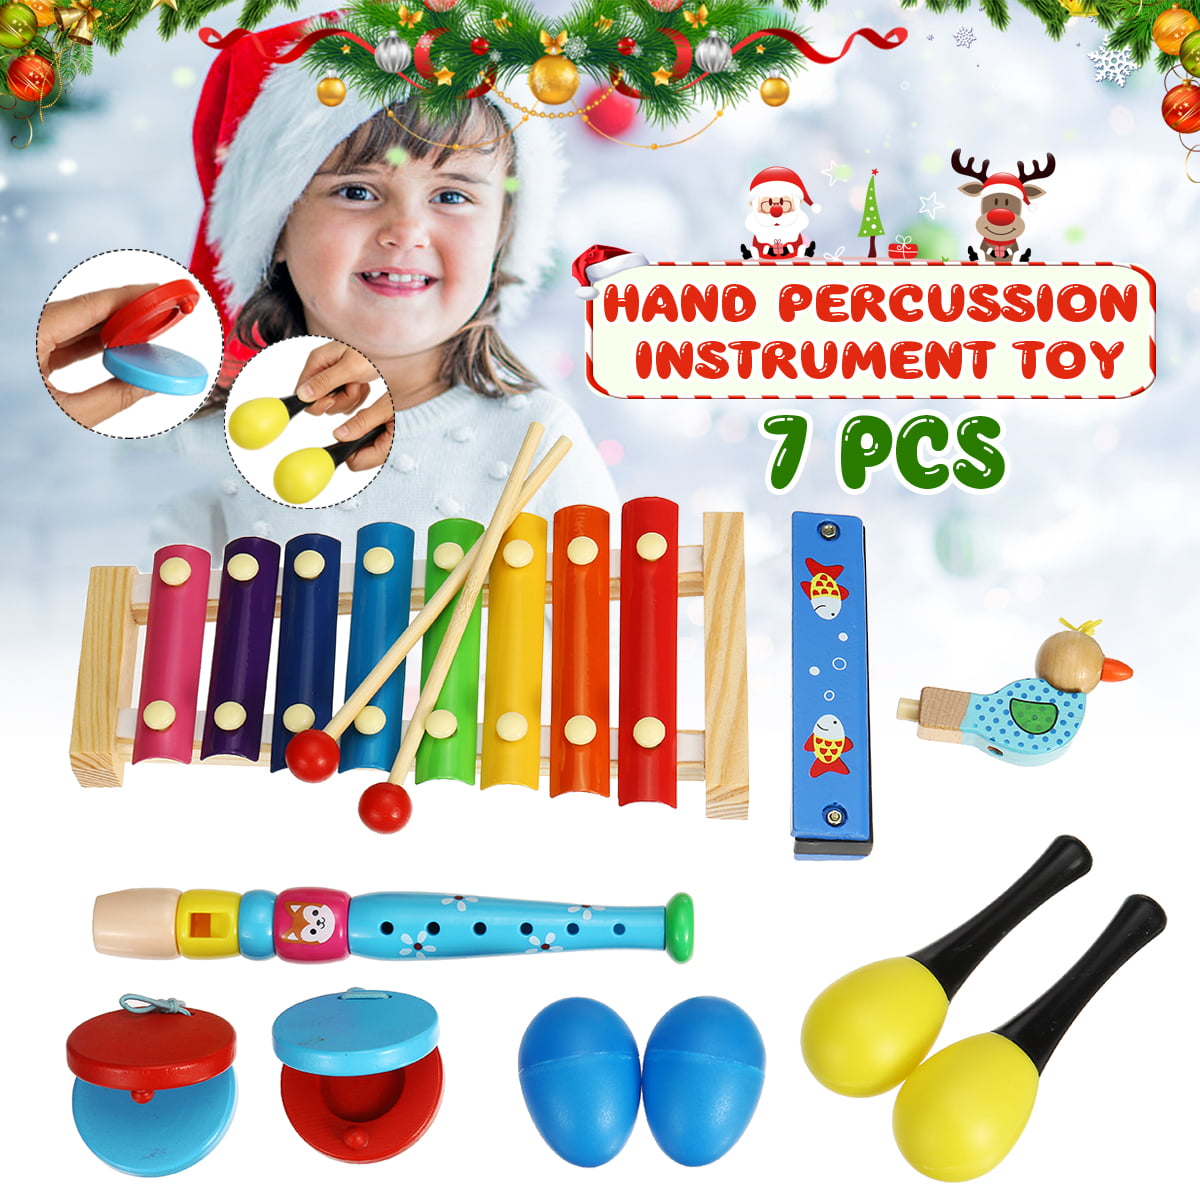 Orff World Wooden Educational Teach Musical Instrument Set Kids Baby Toys 